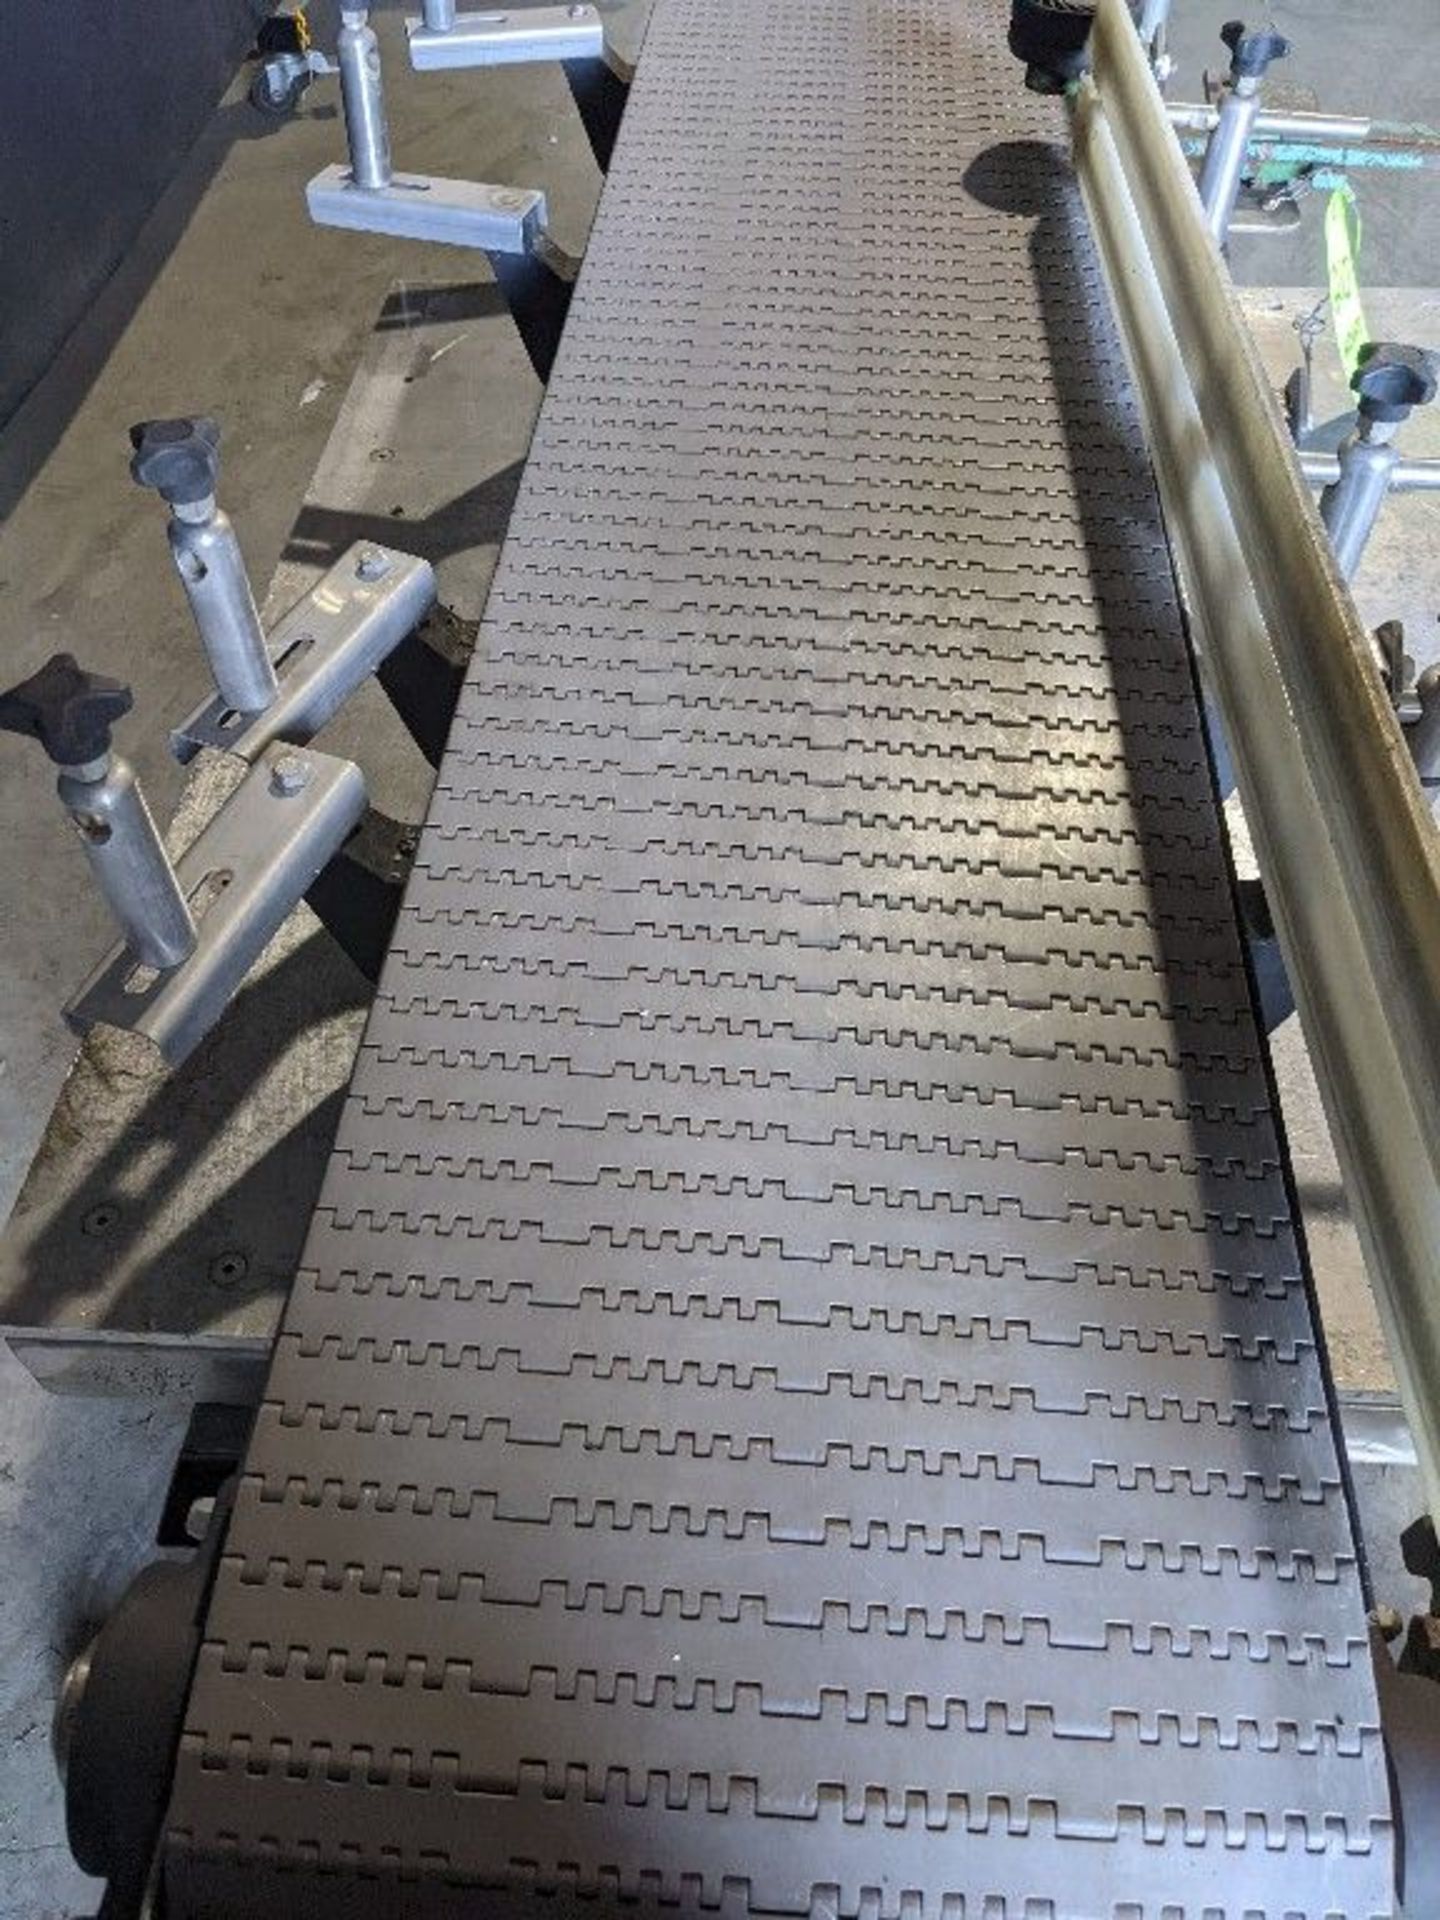 Qty (1) Fleetwood Stainless Steel Matt Top Conveyor - Matt top conveyor - 15' W belt x 78' long body - Image 5 of 5